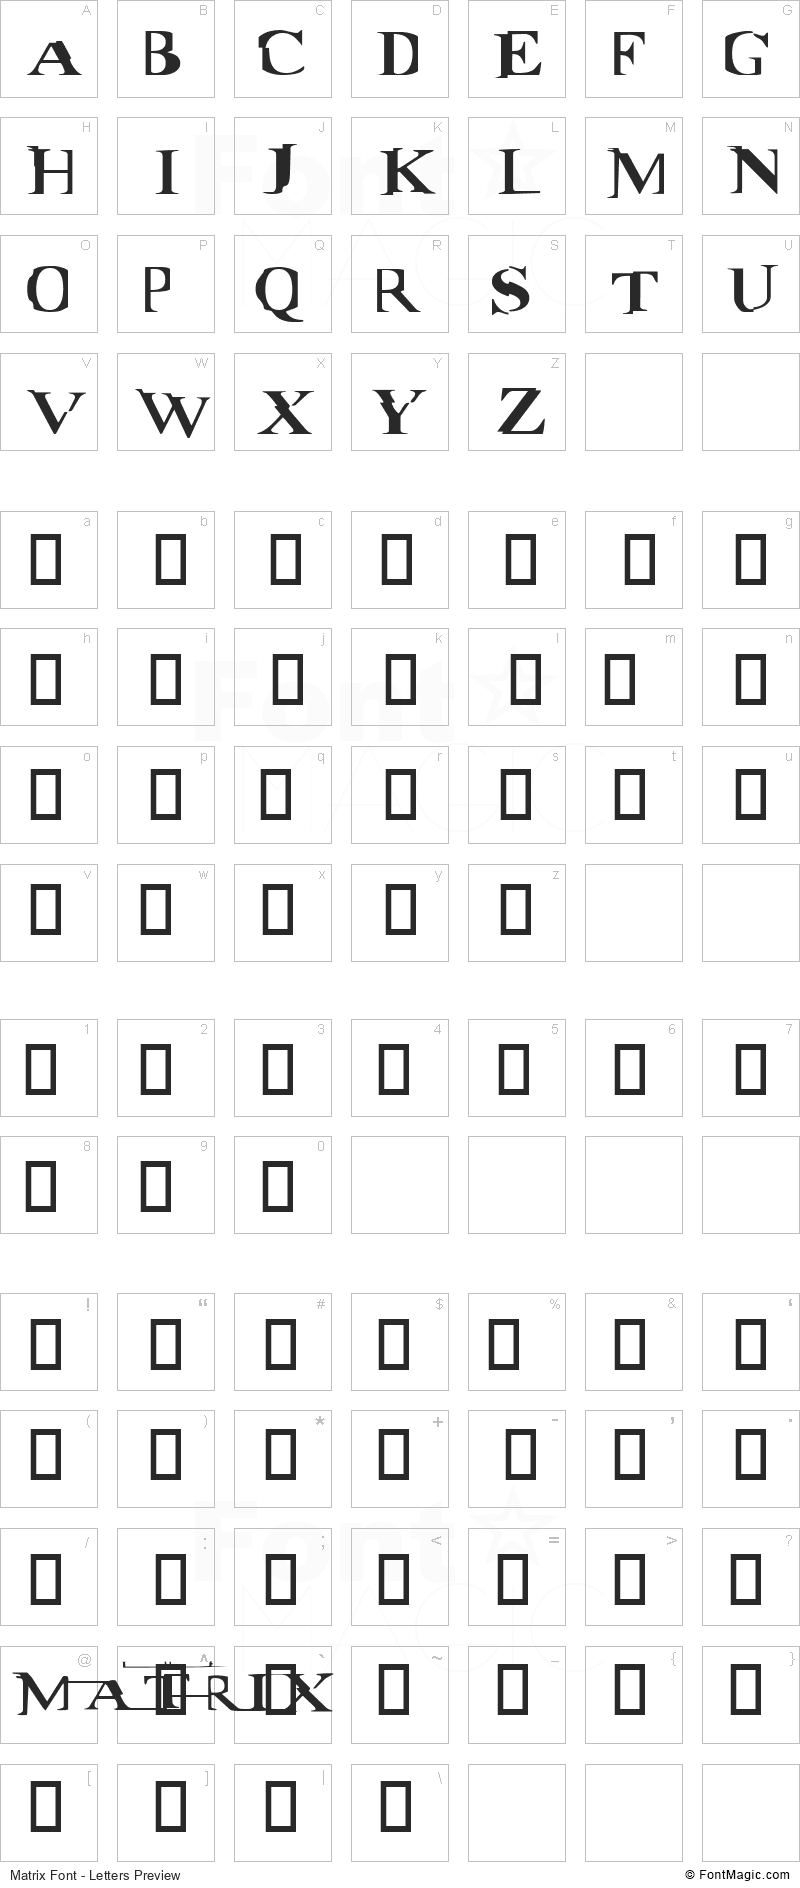 Matrix Font - All Latters Preview Chart